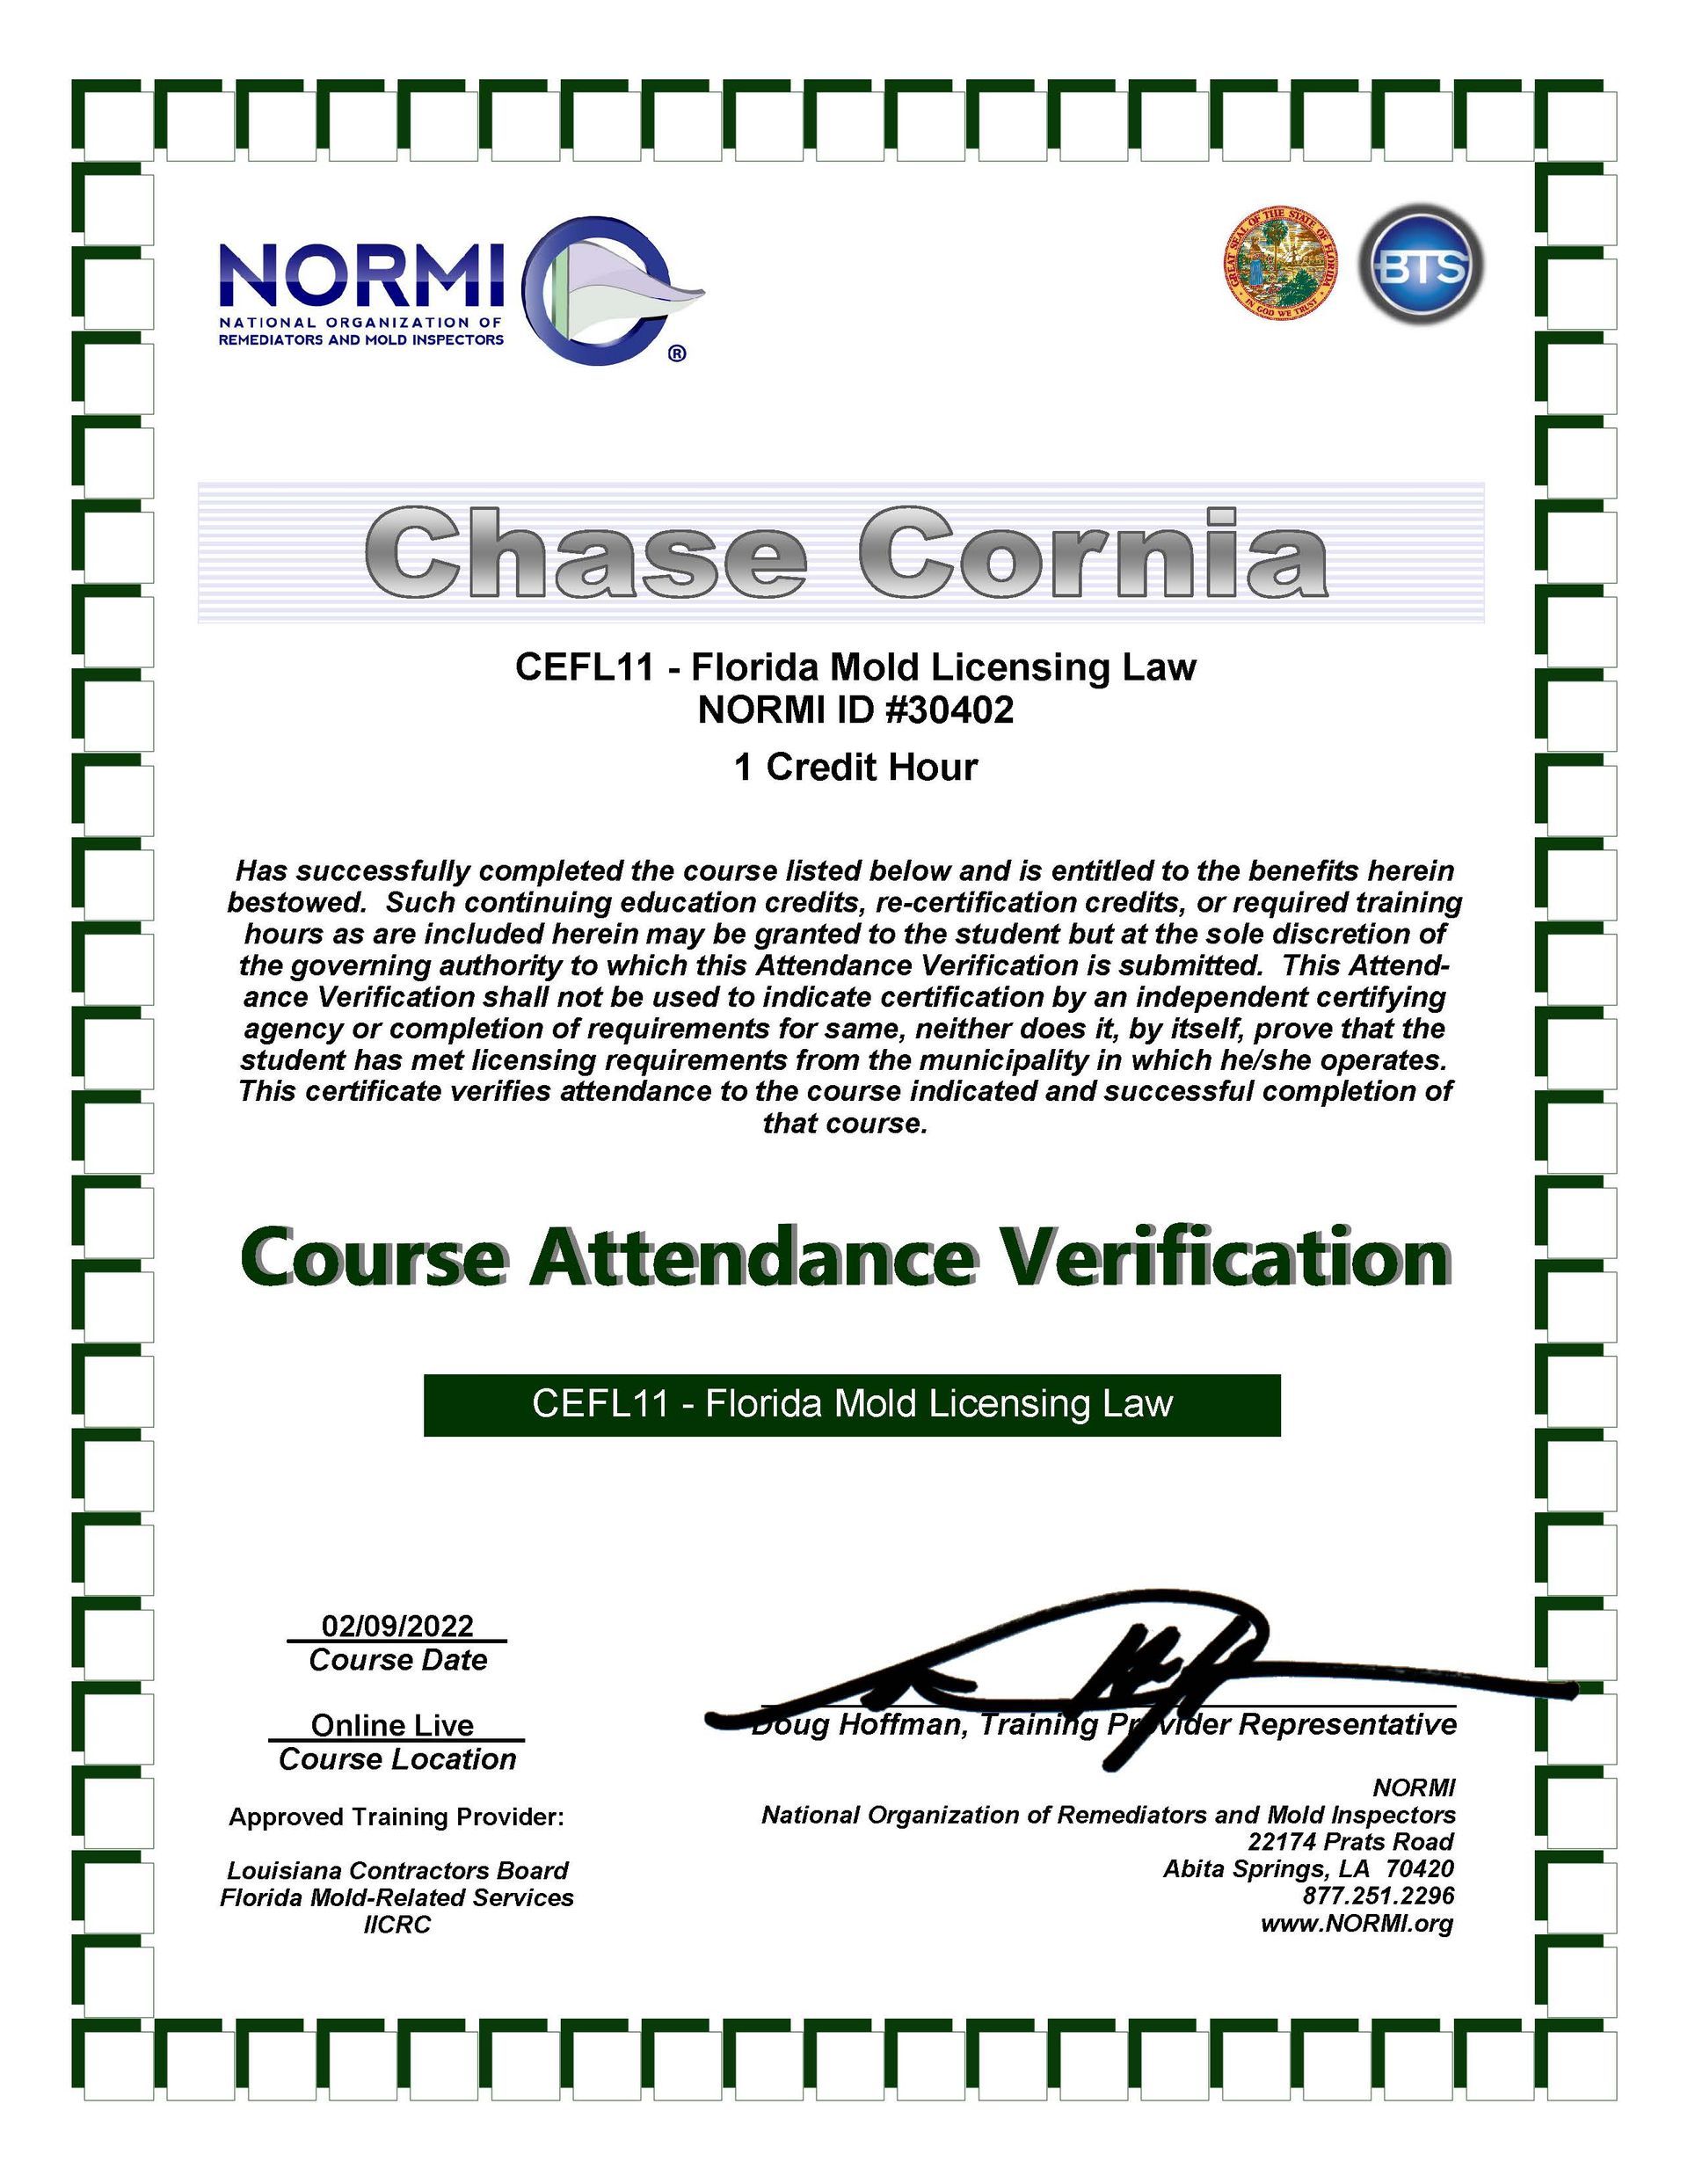 a chase cornia course attendance verification certificate